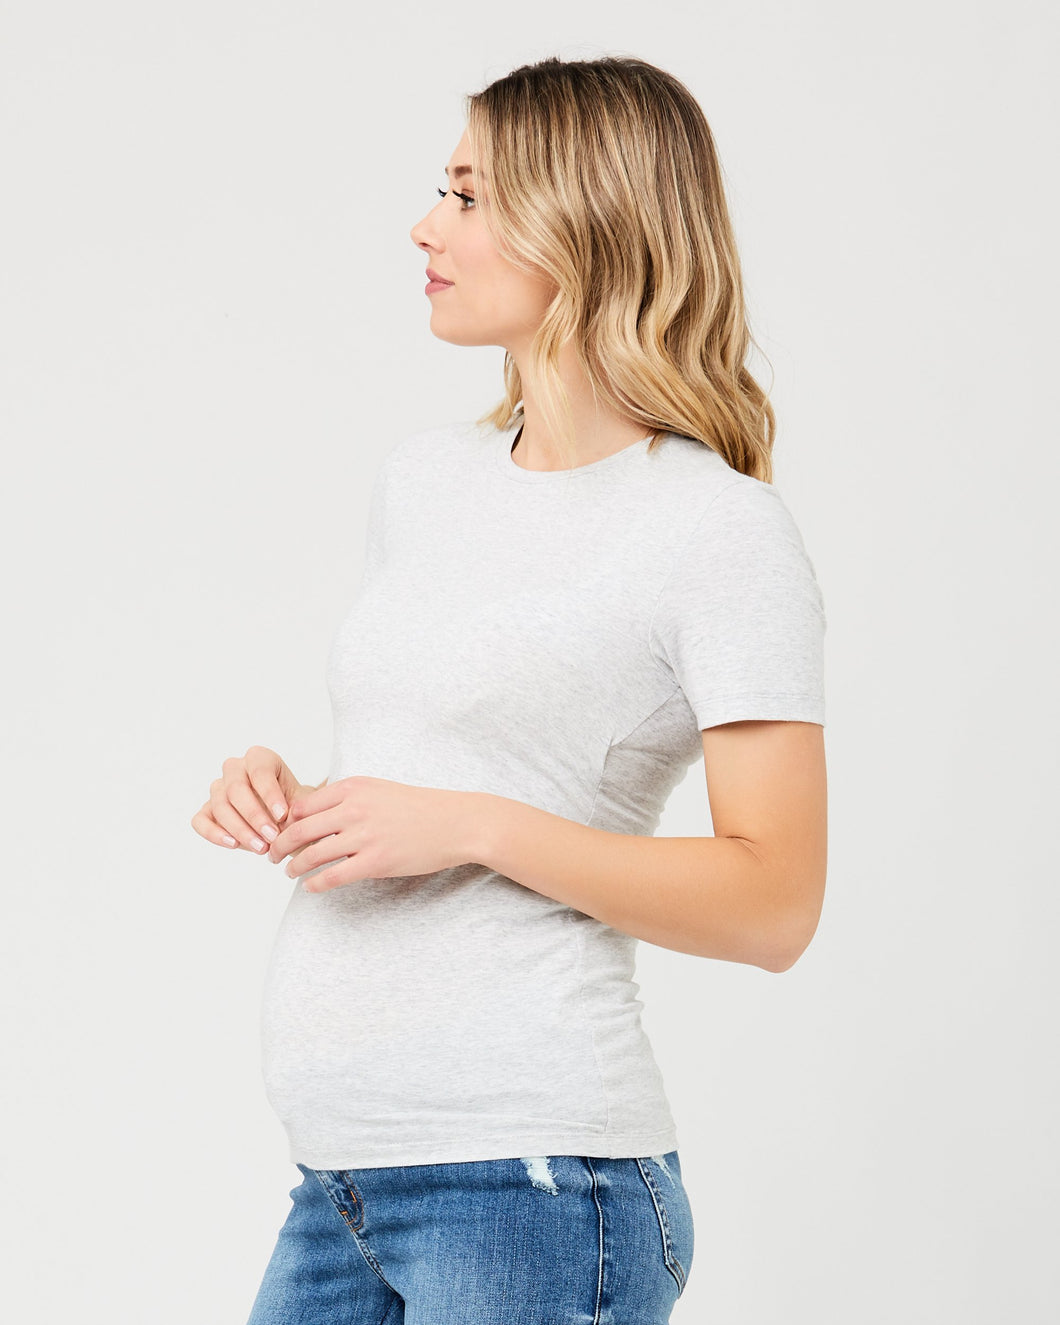 Ripe Maternity - Organic nursing tee silver marle XS  | MILD zwangerschapsboetiek - zwangerschapskleding bij Mechelen